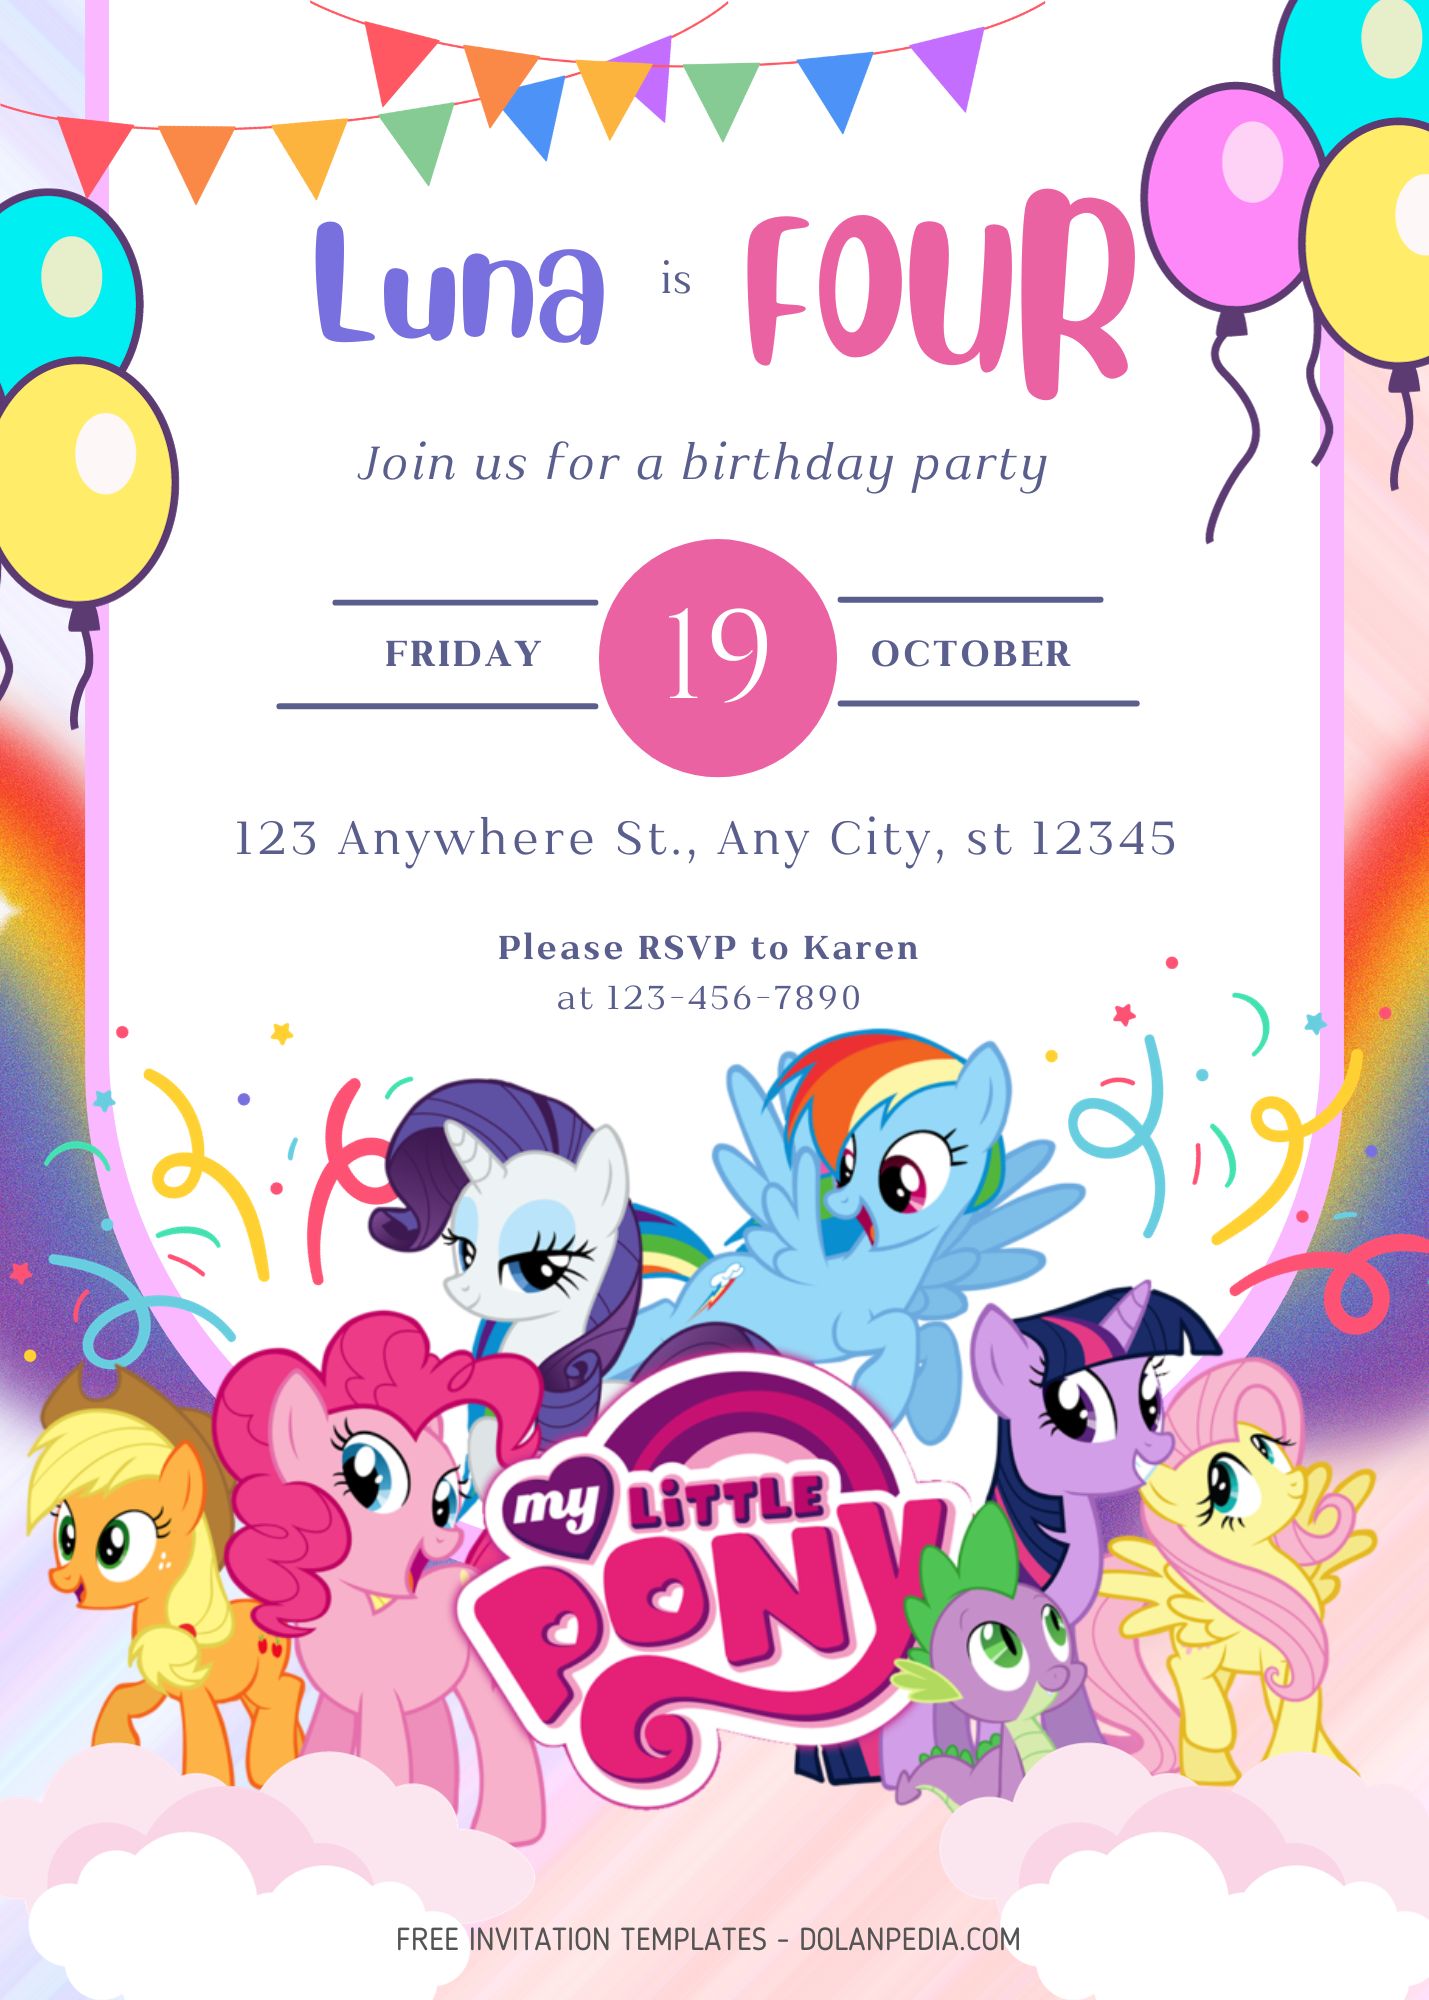 FREE My Little Pony Rainbow Party Invitation Templates